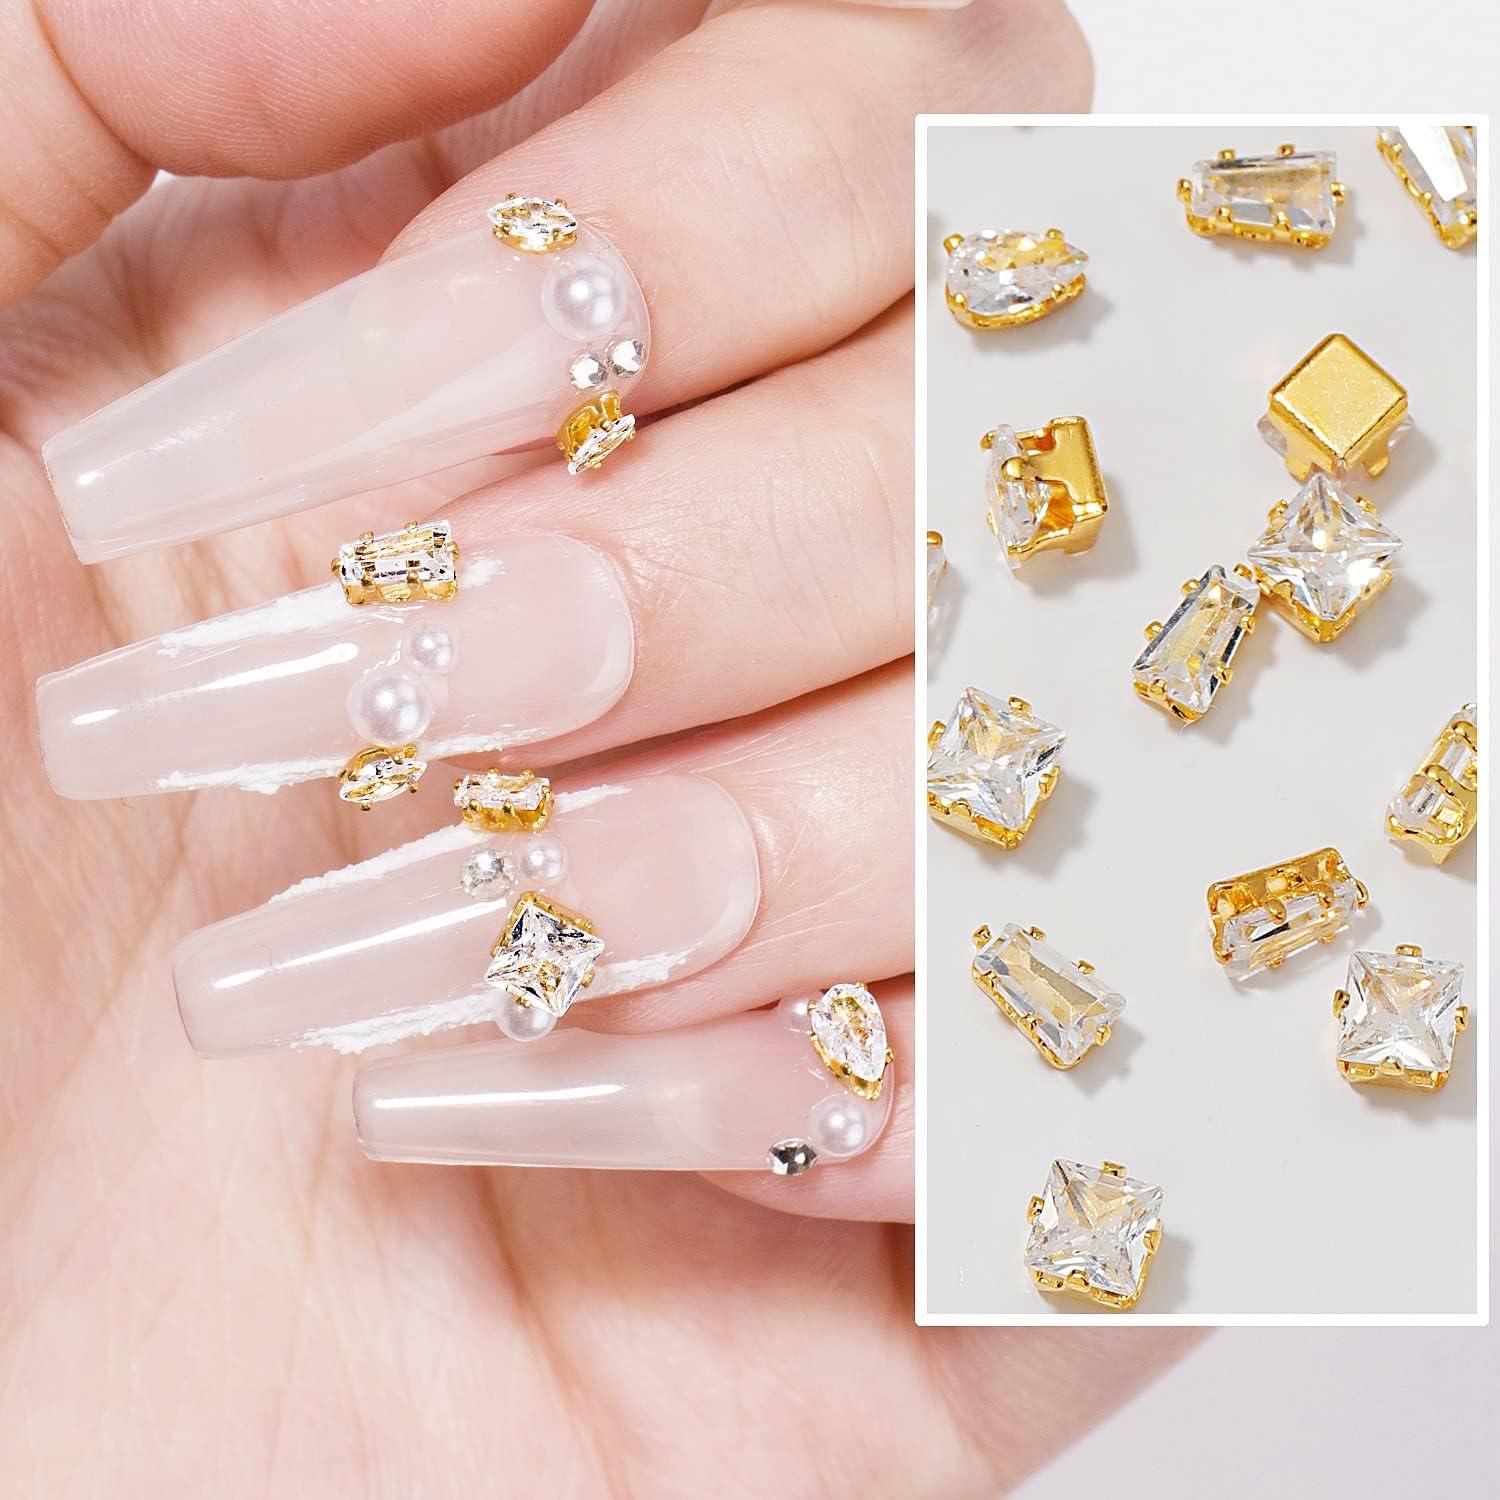 20g Nail Art Rhinestones Ore Gold Nail Gems Stone 3D Nail Art Decoration  Charms Broken Slice Nail Accessories Parts - AliExpress